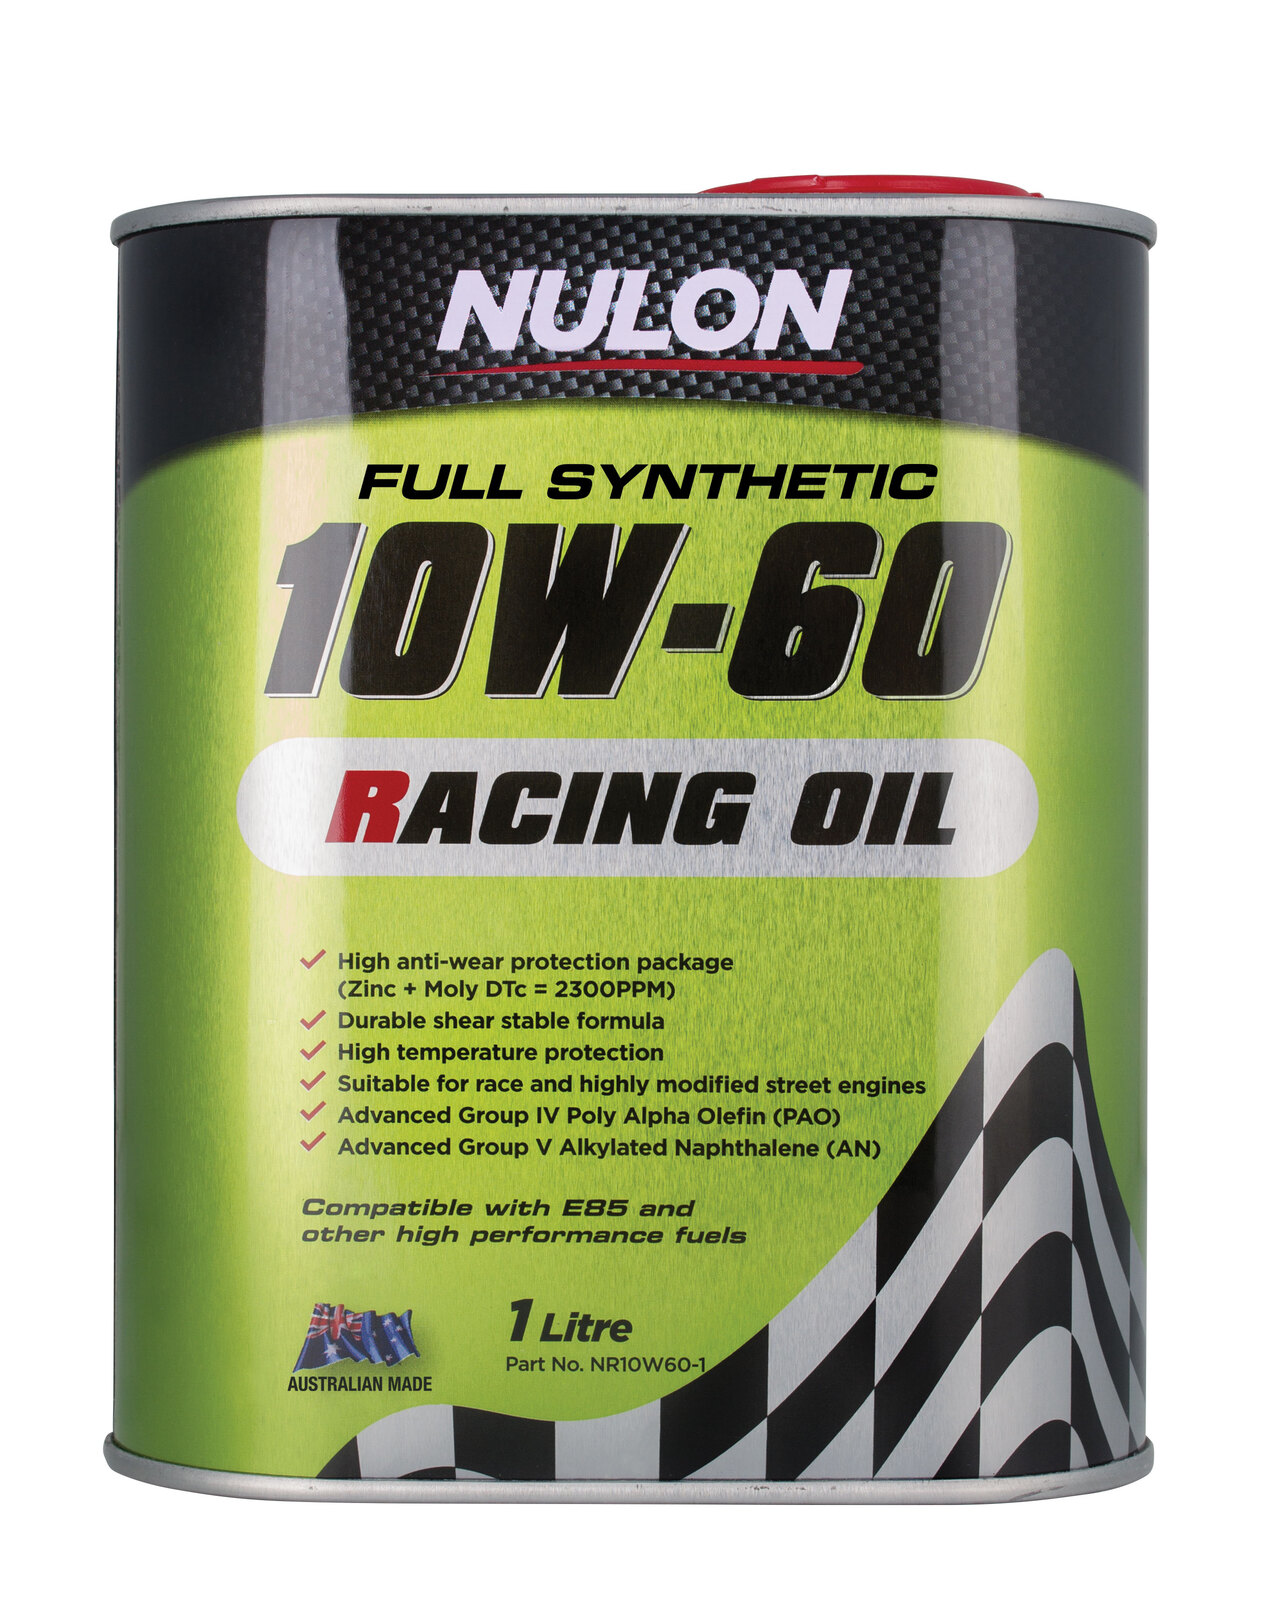 NULON Full Synthetic 10W-60 Racing Oil, Each